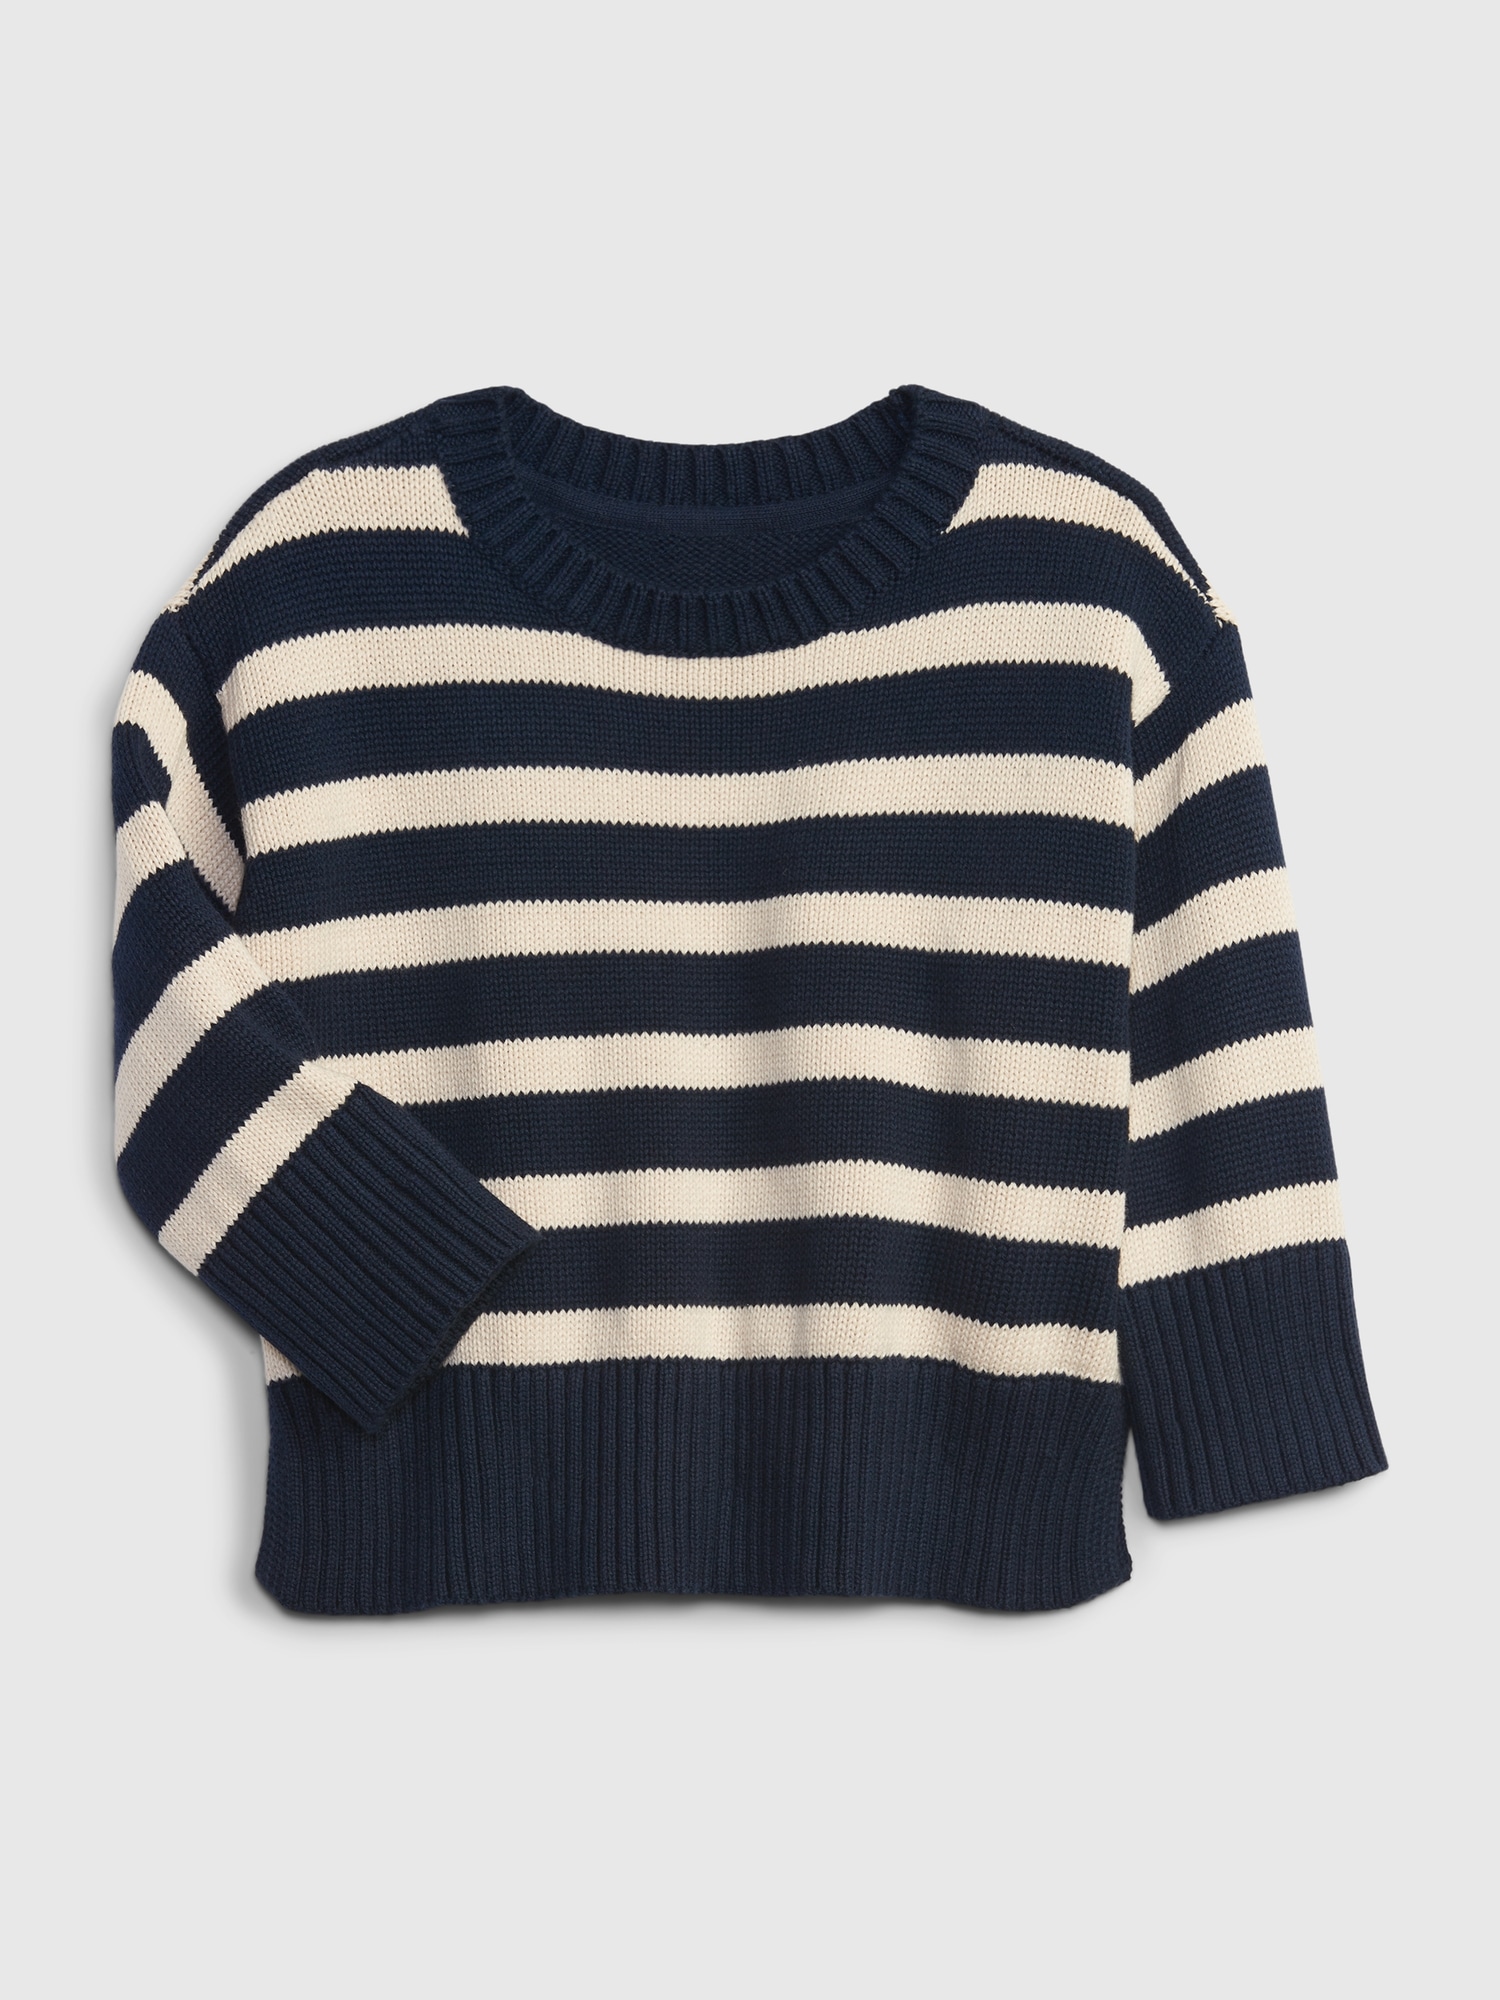 Gap Toddler Striped Boxy Sweater